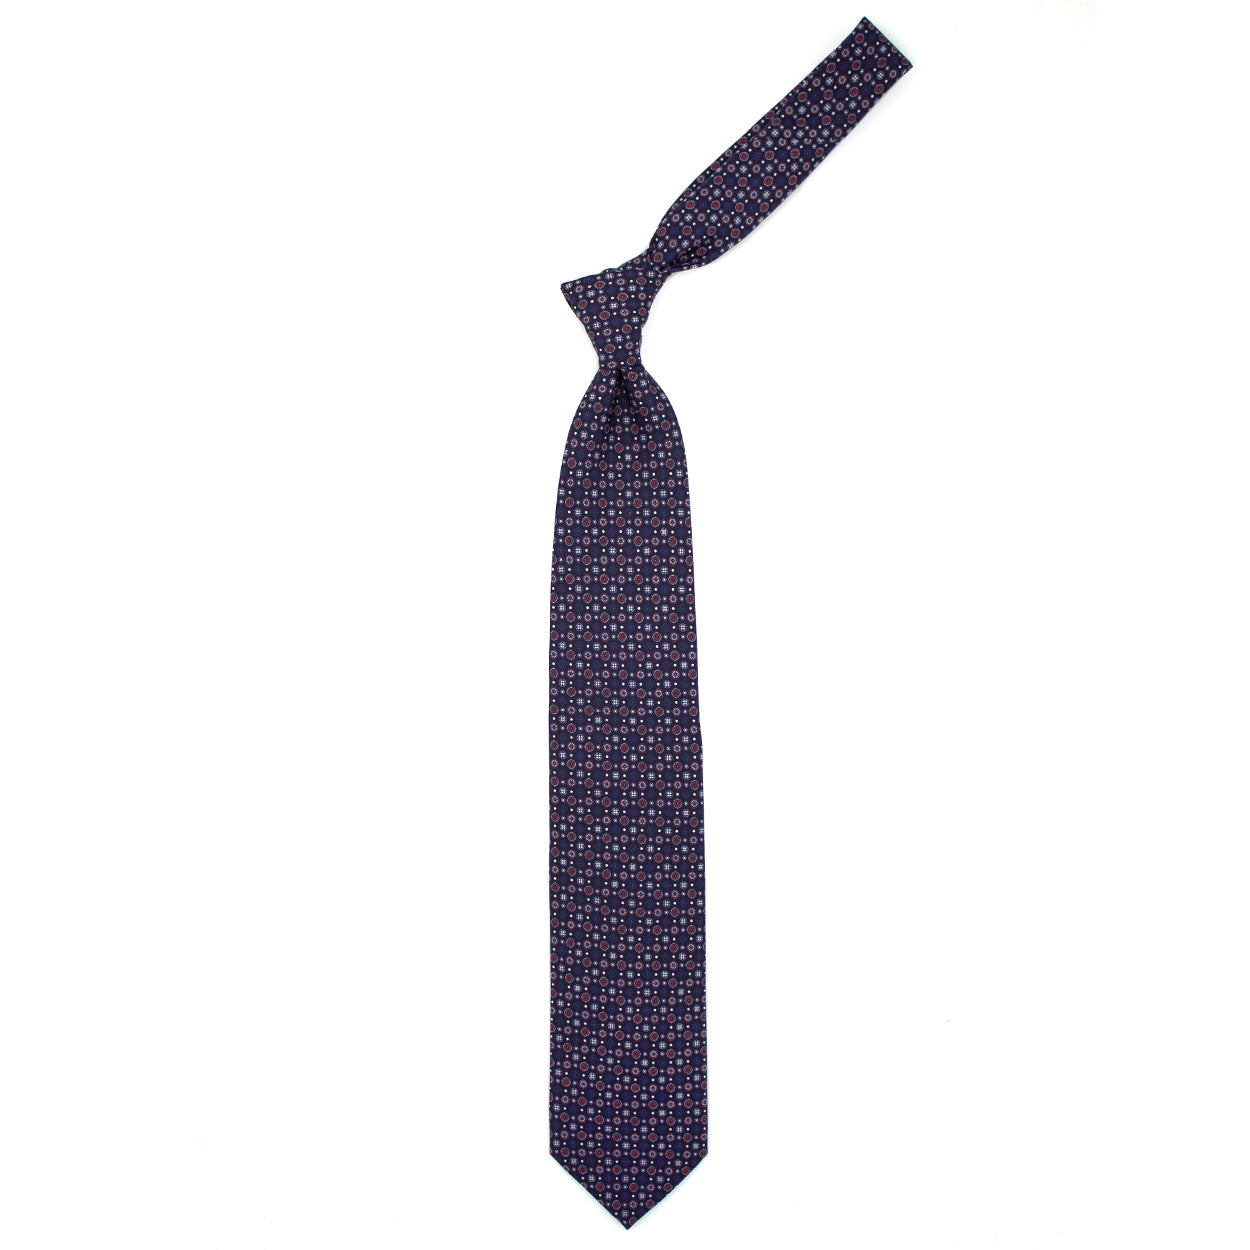 Cravatta blu con pattern rosso, bianco e blu